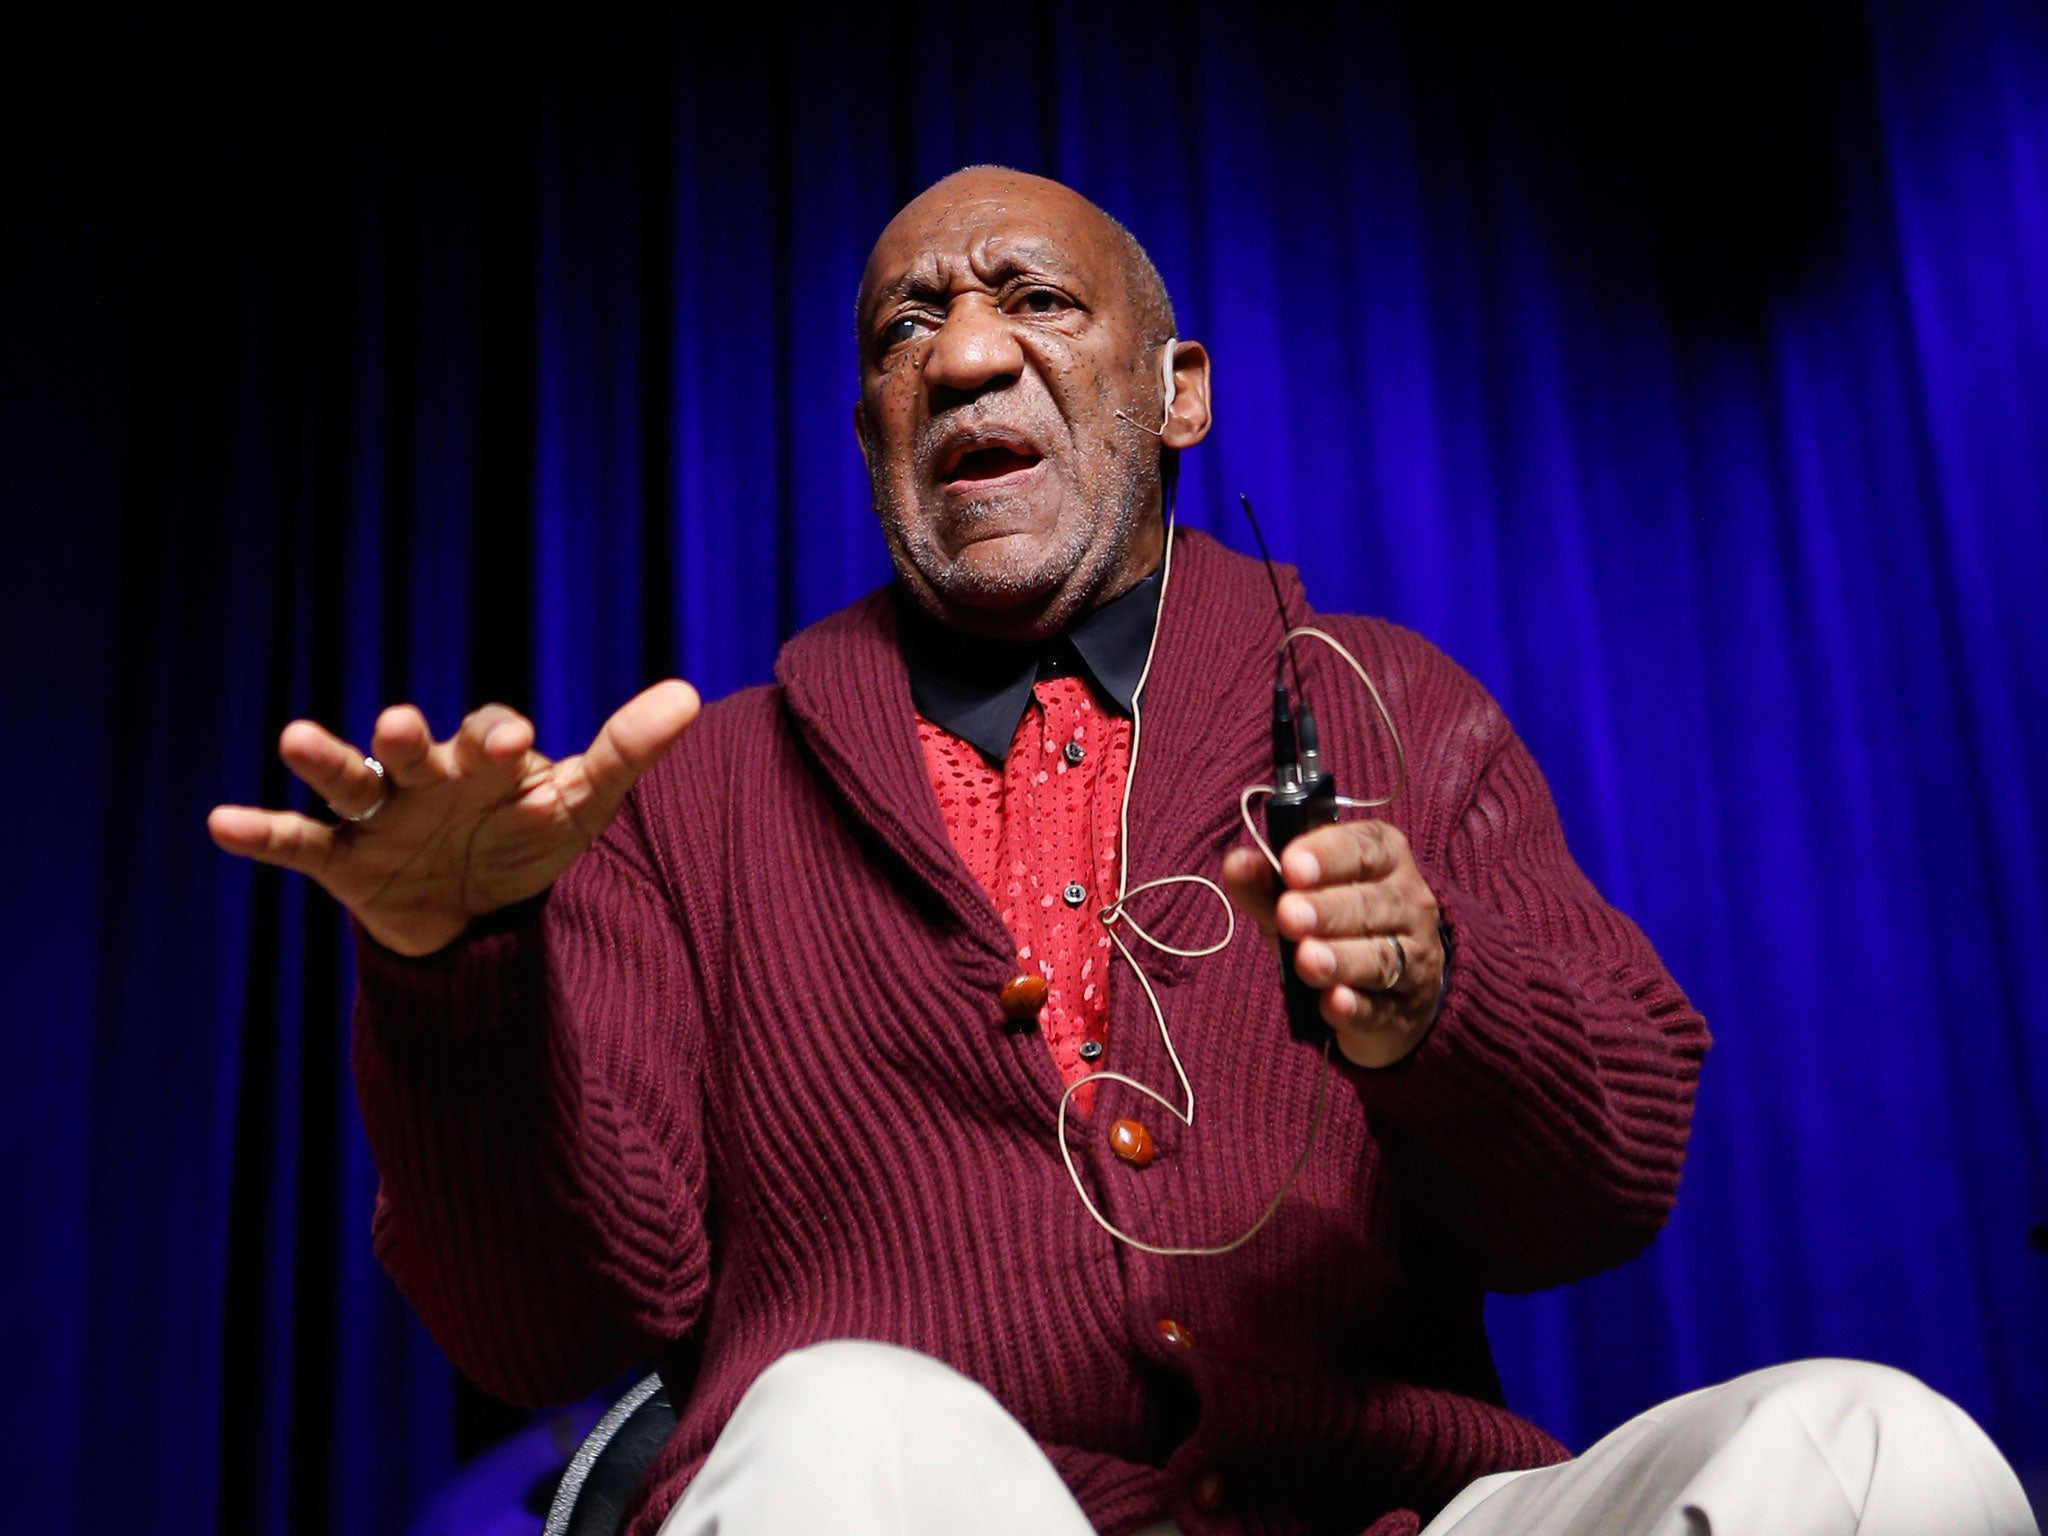 Bill Cosby has denied sexually assaulting dozens of women